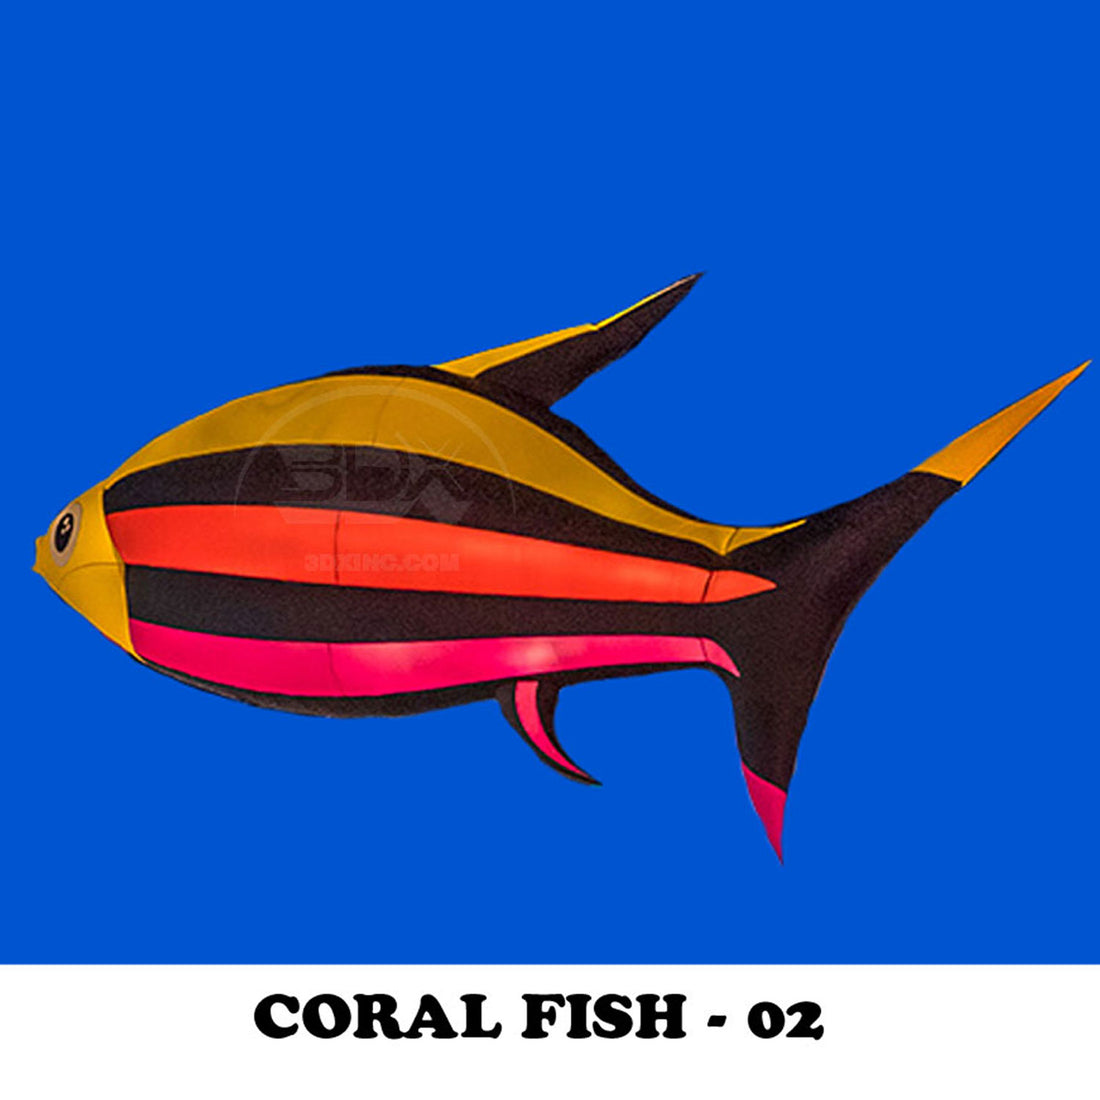 CORAL FISH - 02